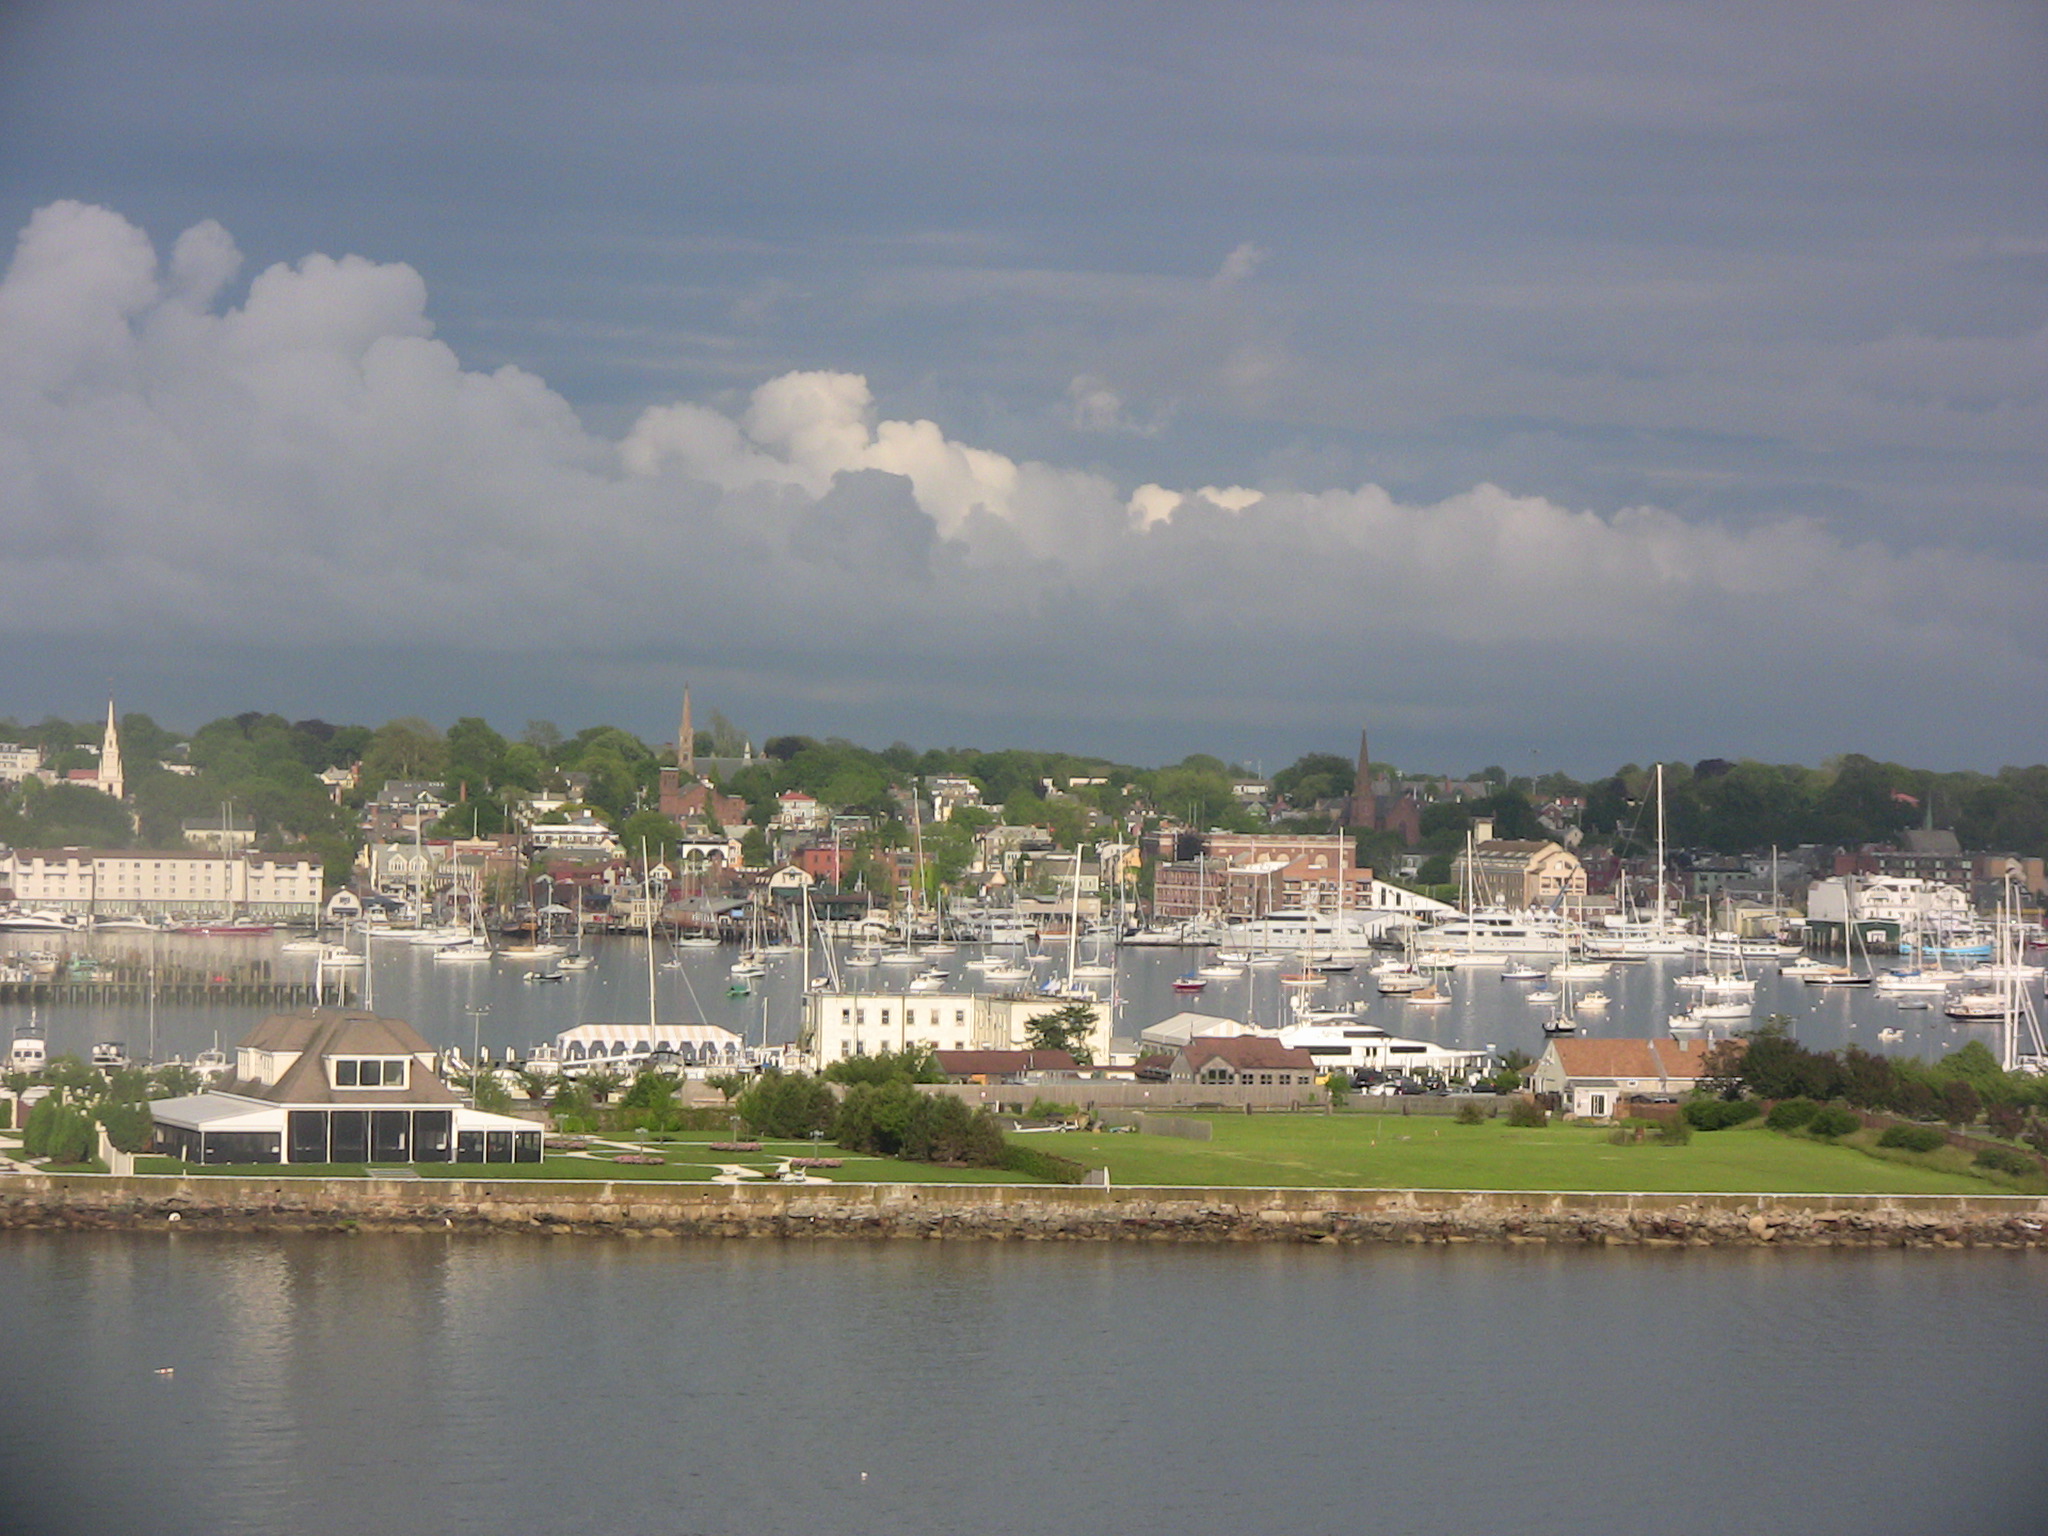 Approaching Newport Harbor